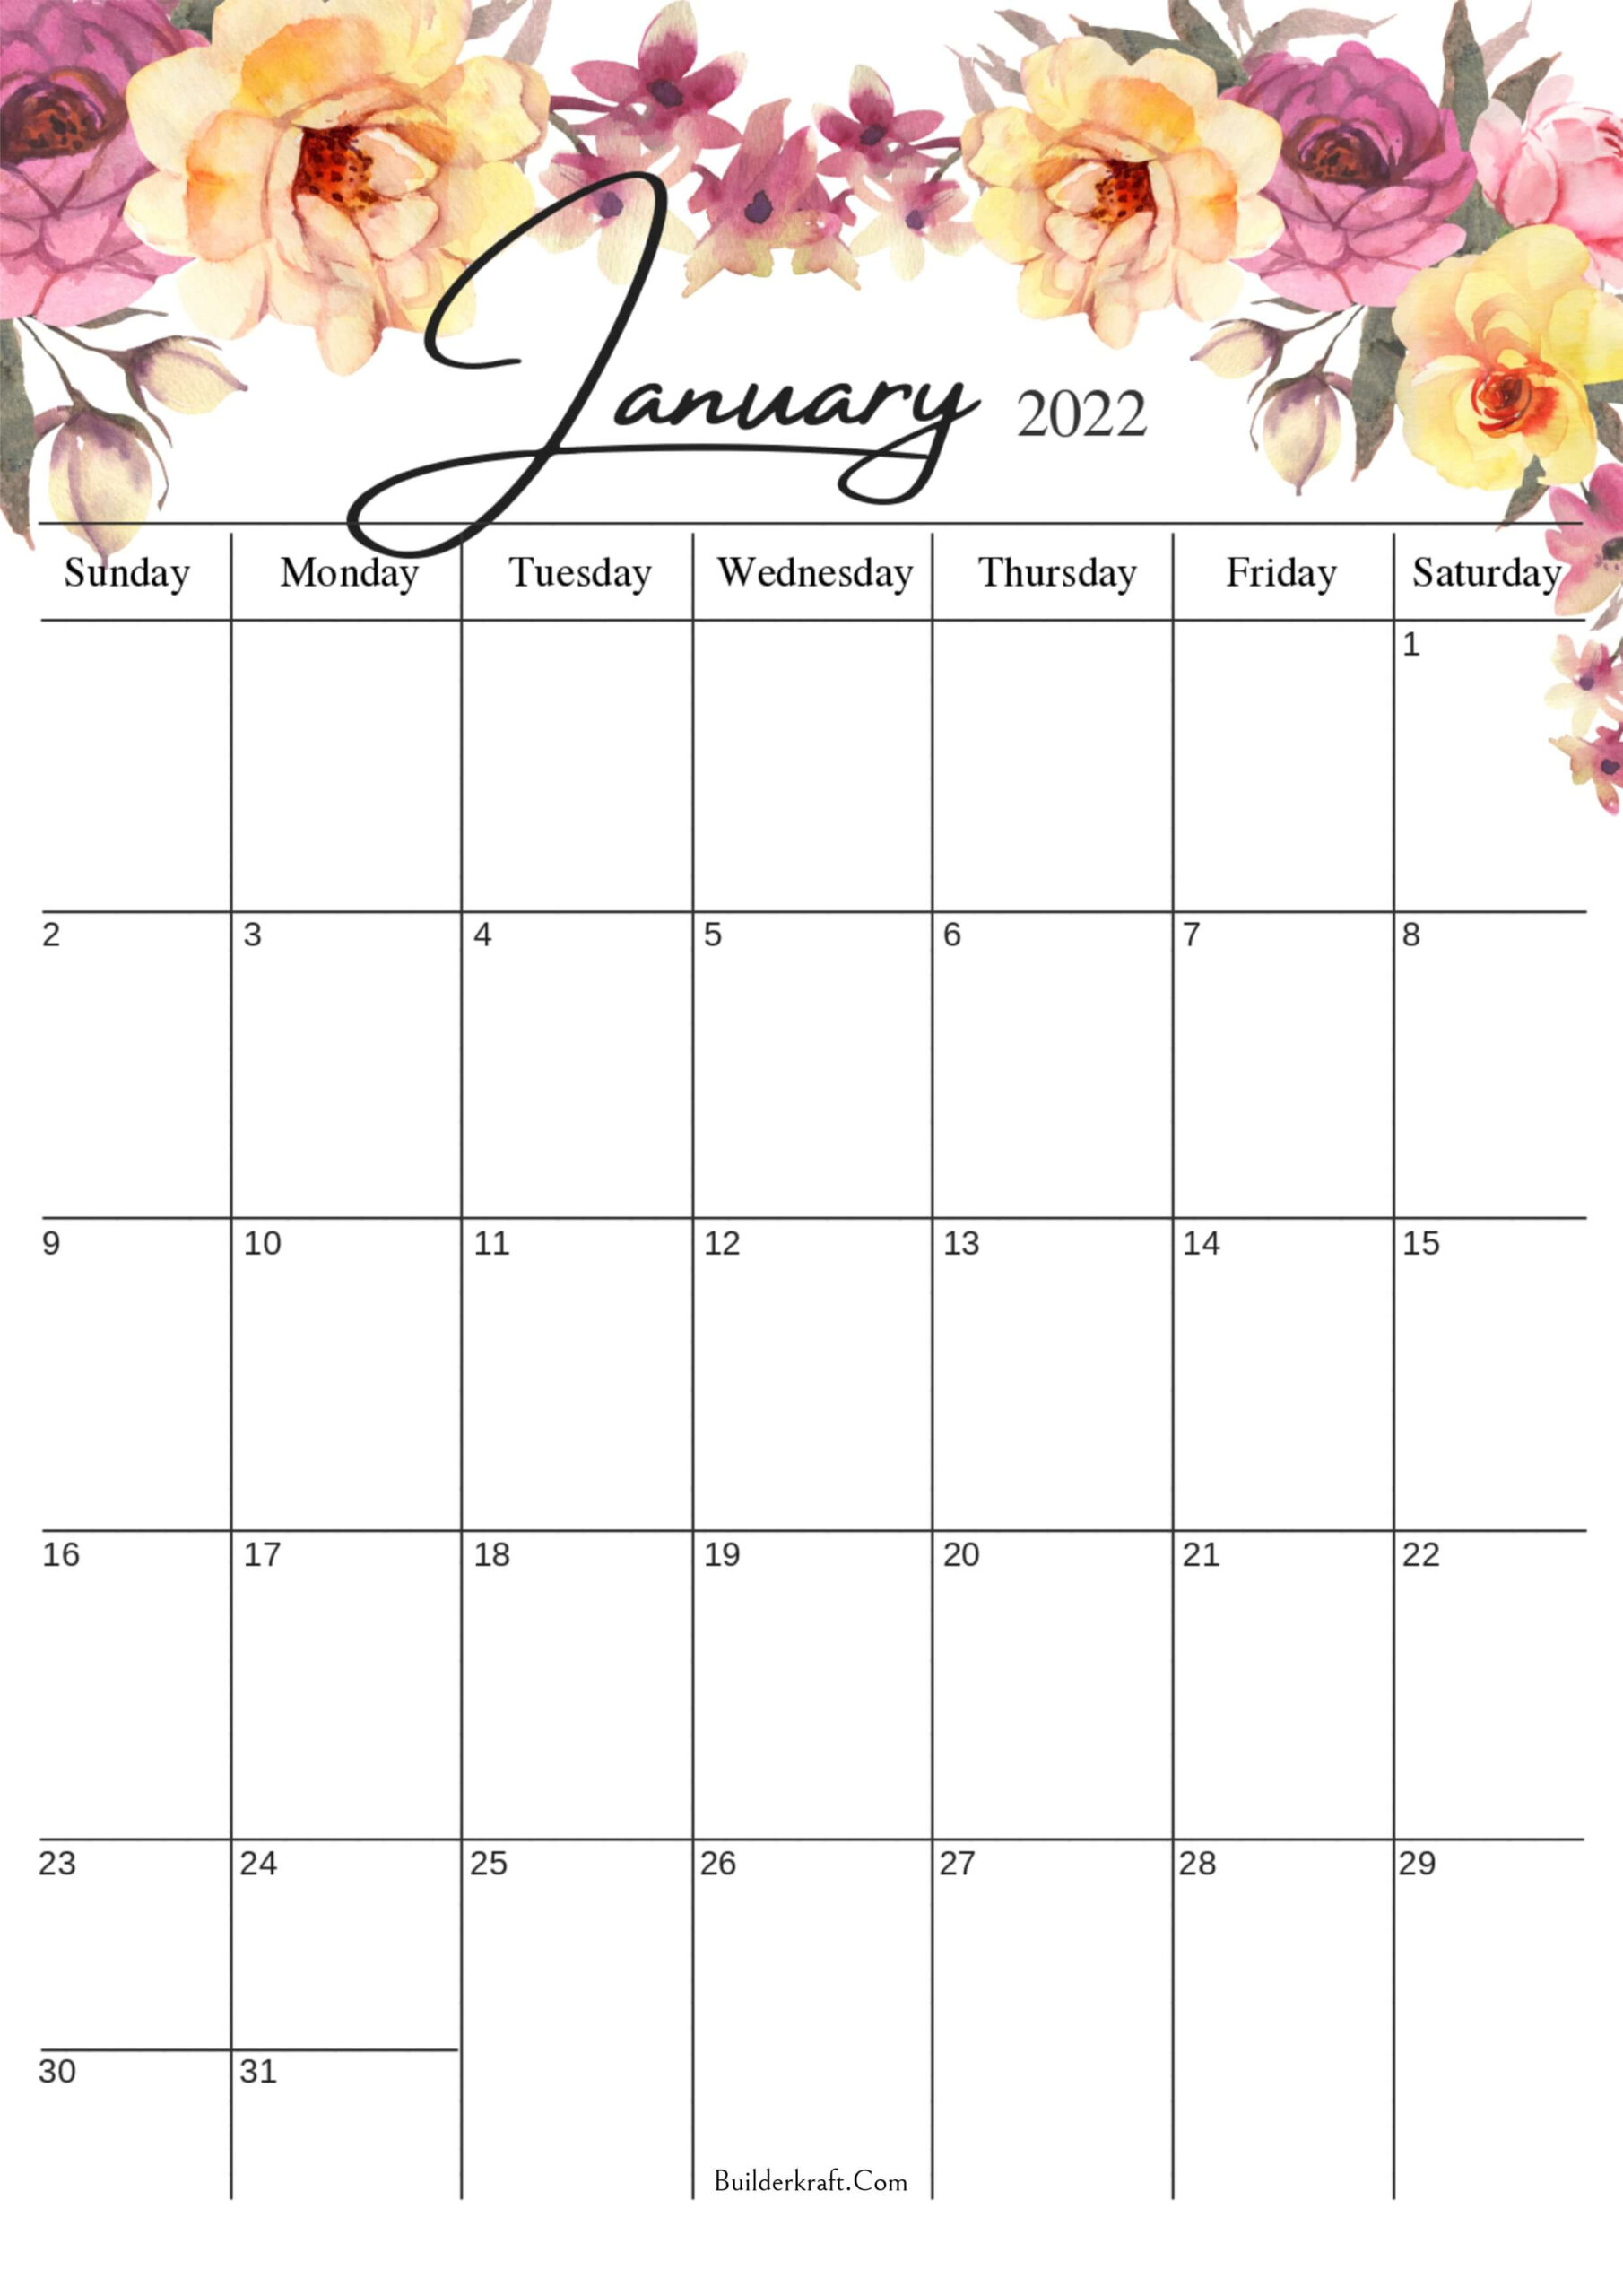 Get January 2022 Calendar 365